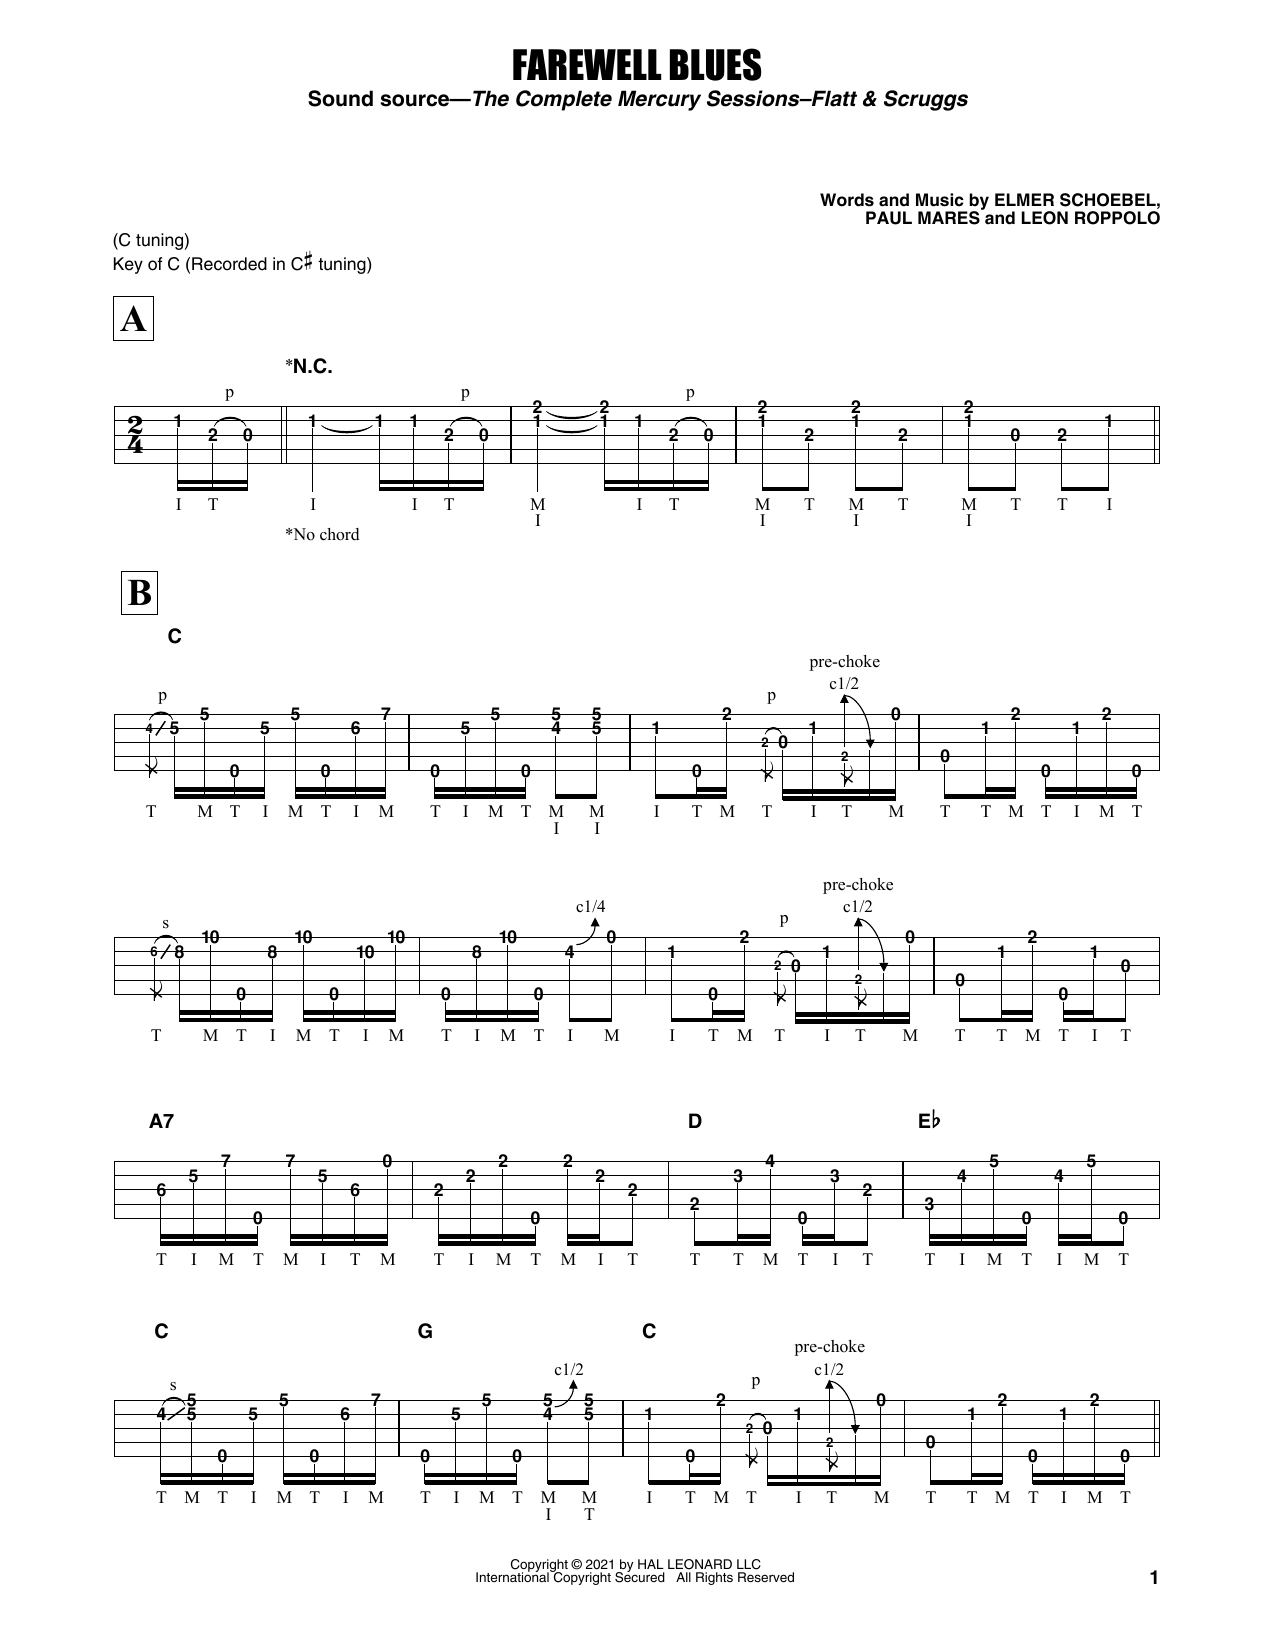 Flatt & Scruggs Farewell Blues Sheet Music Notes & Chords for Banjo Tab - Download or Print PDF